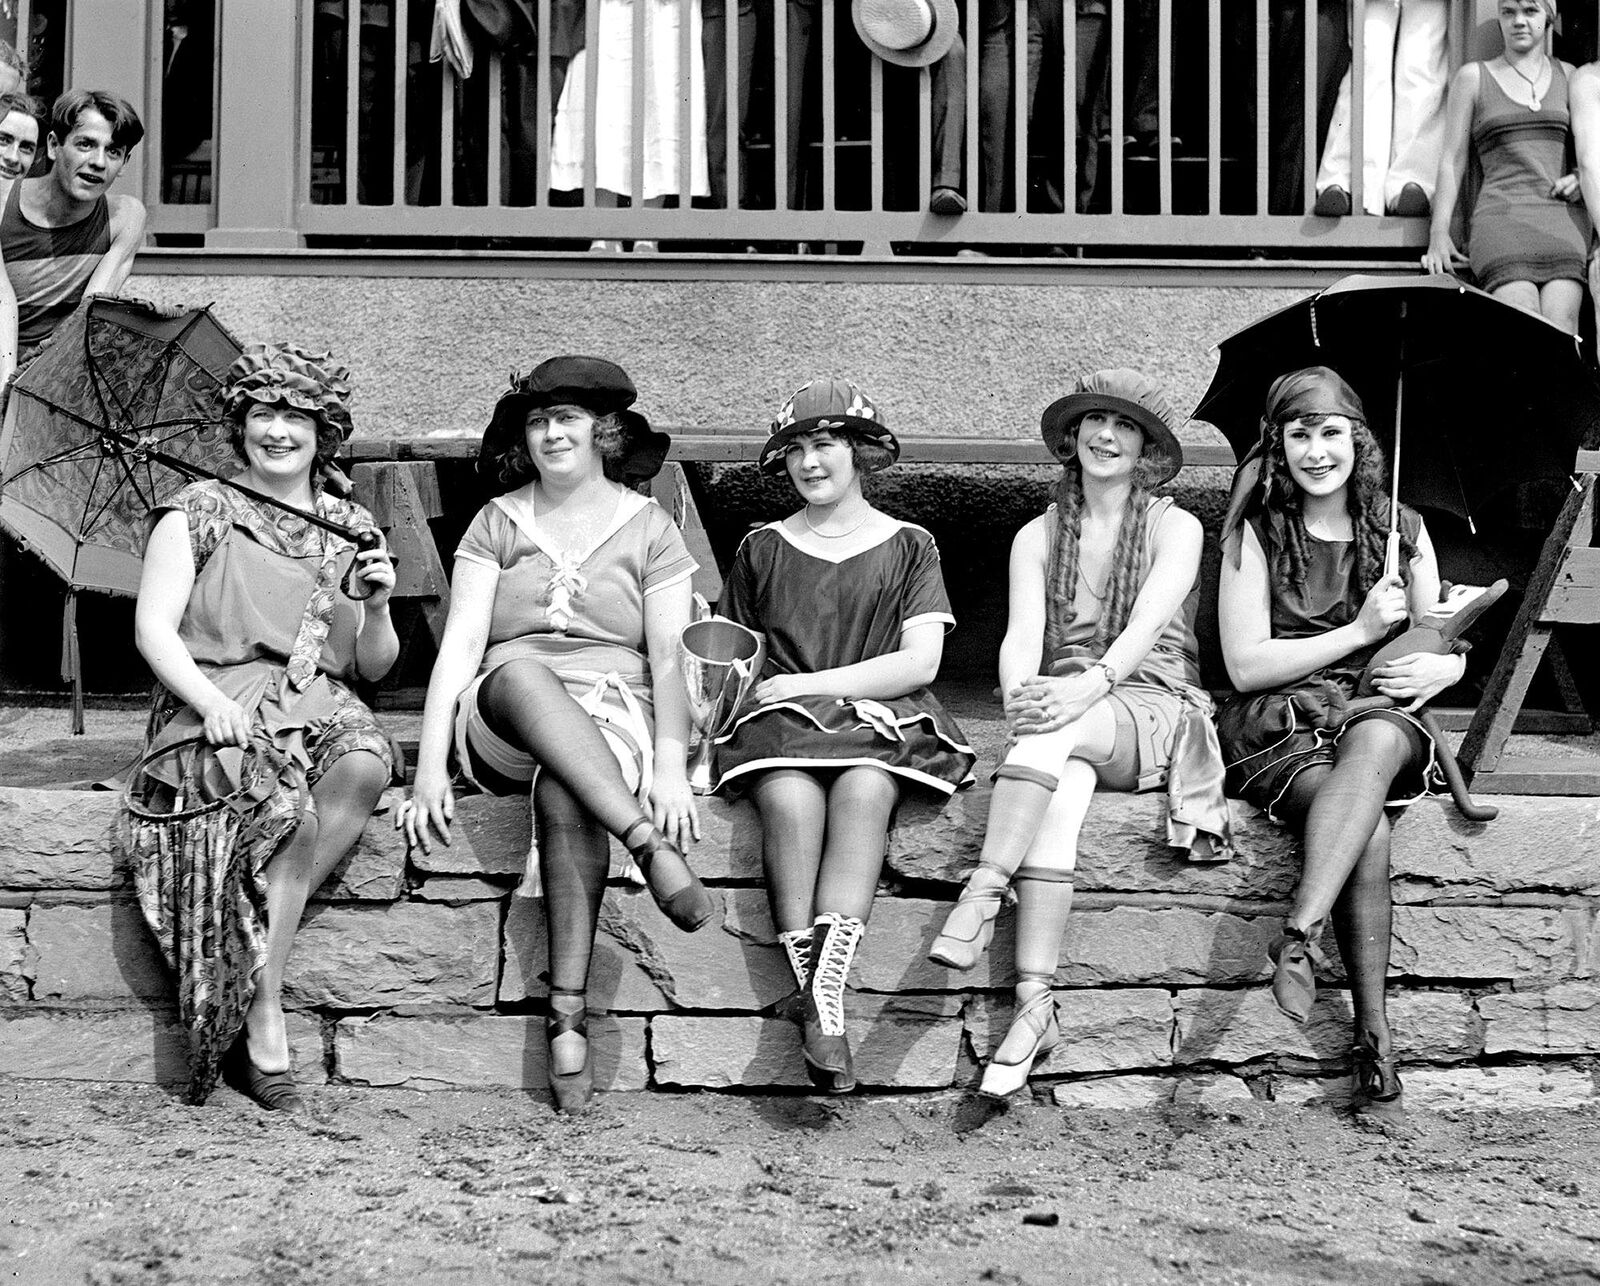 1921 BATHING BEAUTIES Costume Contest PHOTO  (176-W)